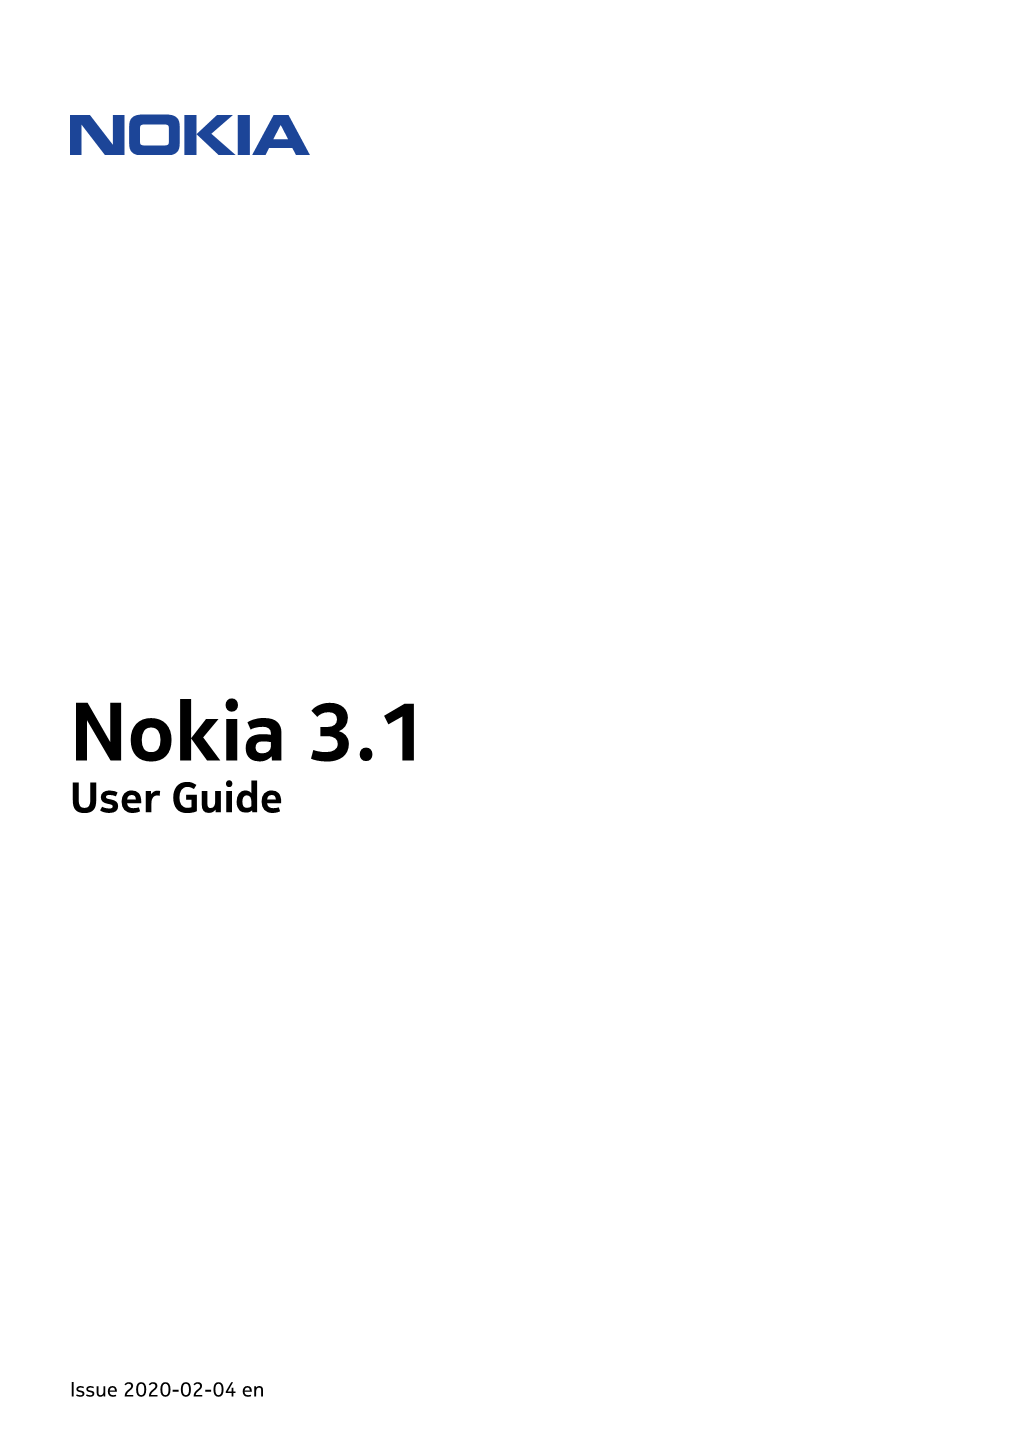 Nokia 3.1 User Guide Pdfdisplaydoctitle=True Pdflang=En